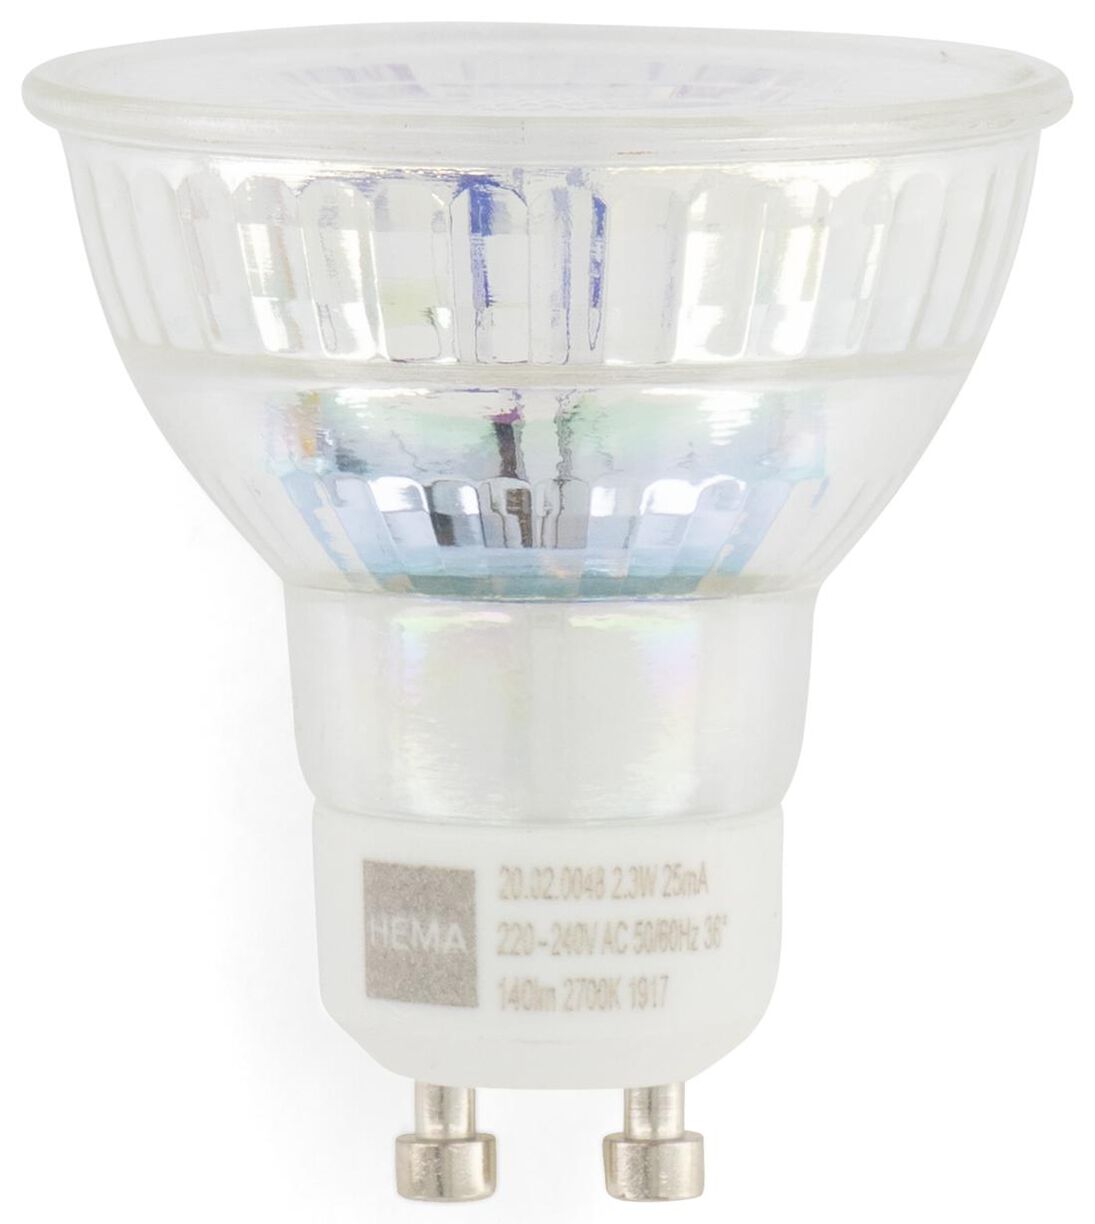 LED lamp 25W - 140 lm - spot - helder - HEMA